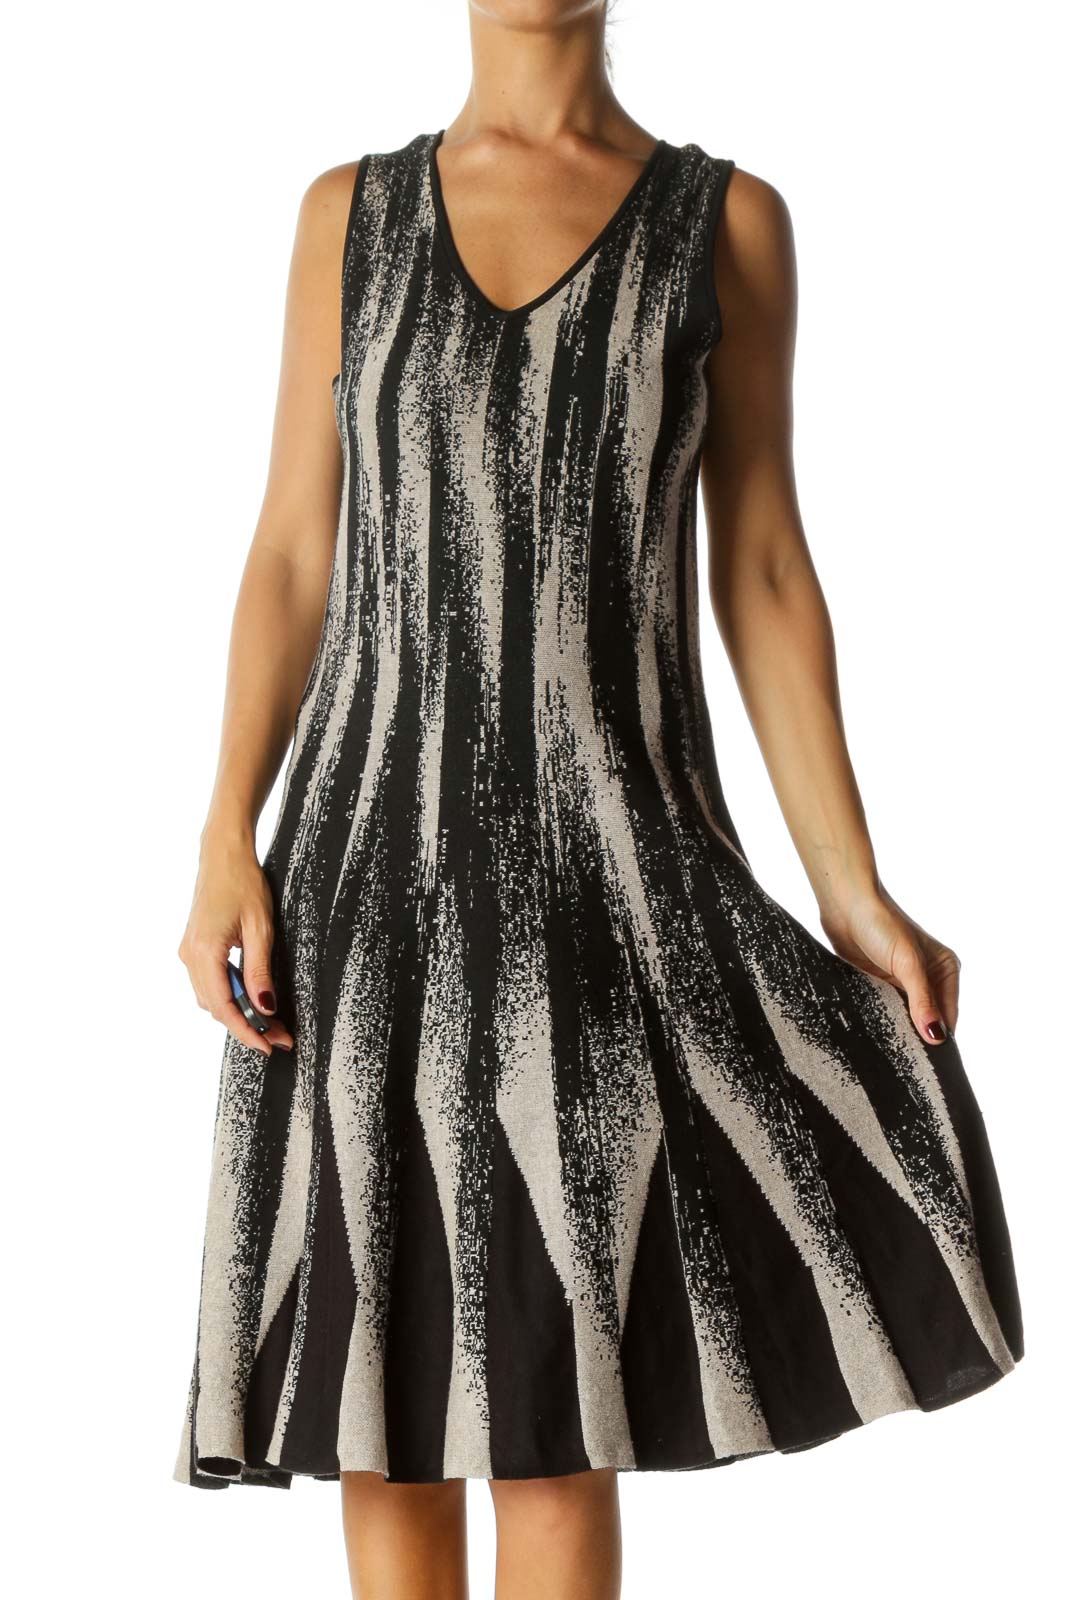 Black Beige Silver Thread V-Neck Knit Textured Flared Dress Front